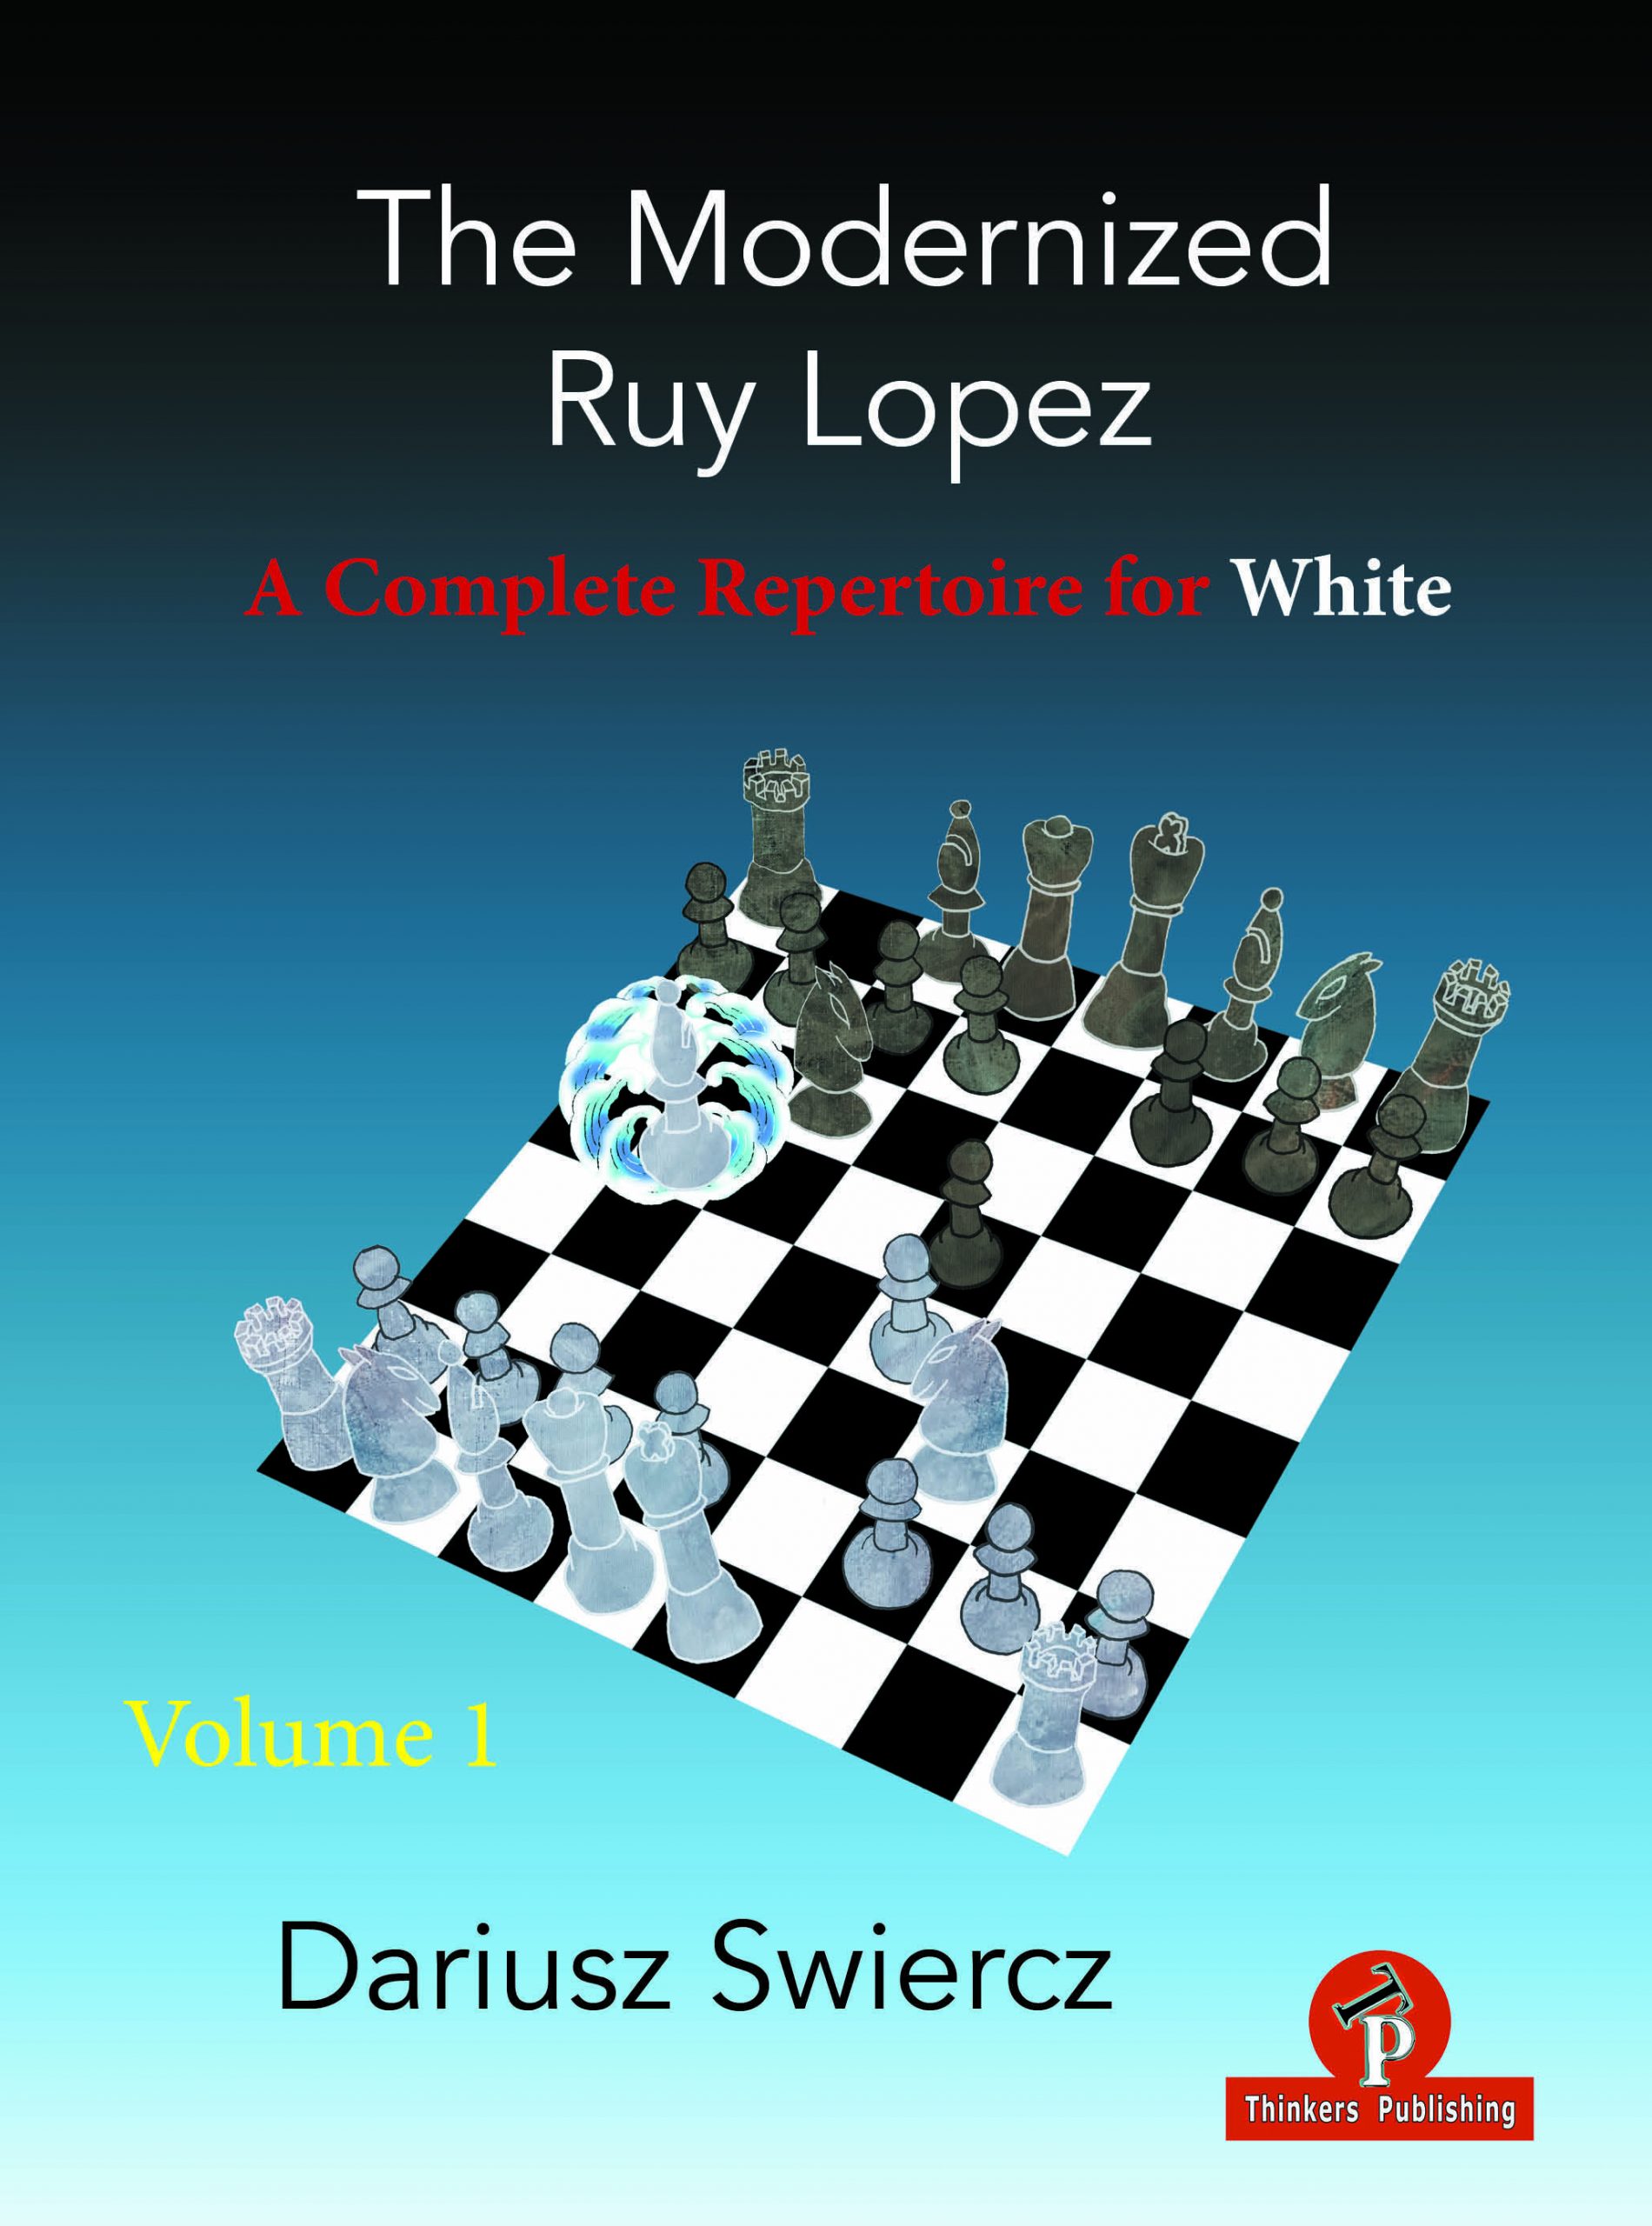 Ruy Lopez Exchange Variation Resources? : r/chess